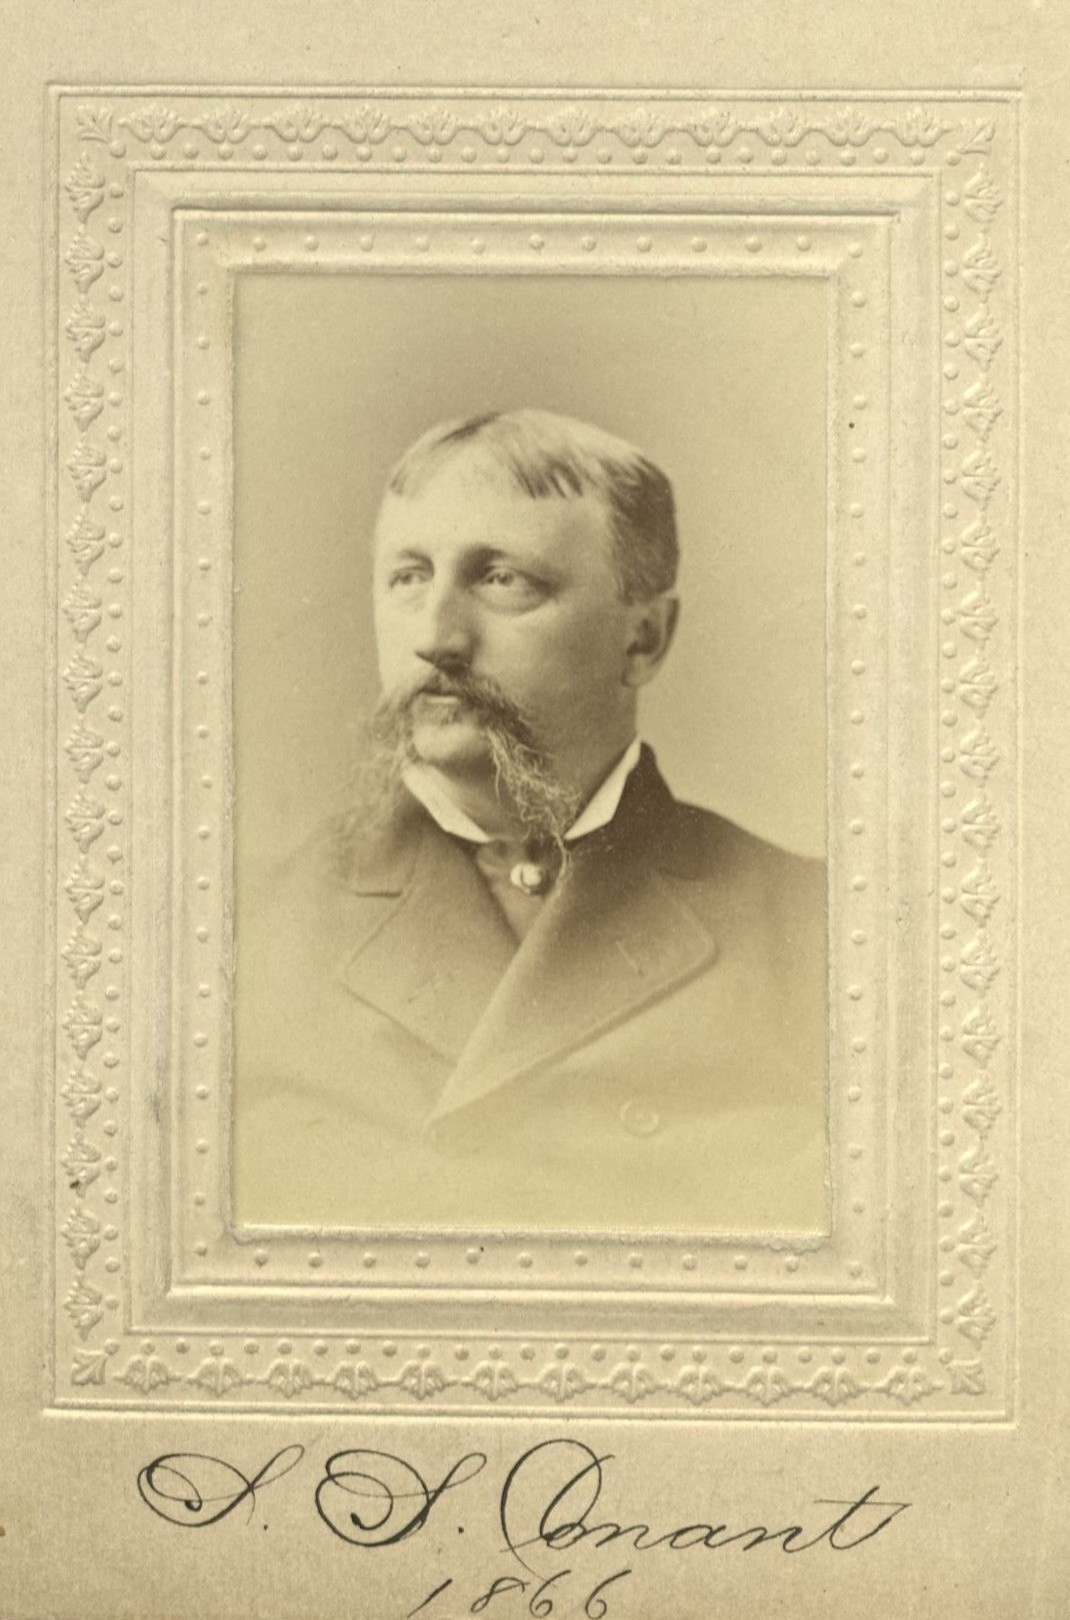 Member portrait of S. S. Conant